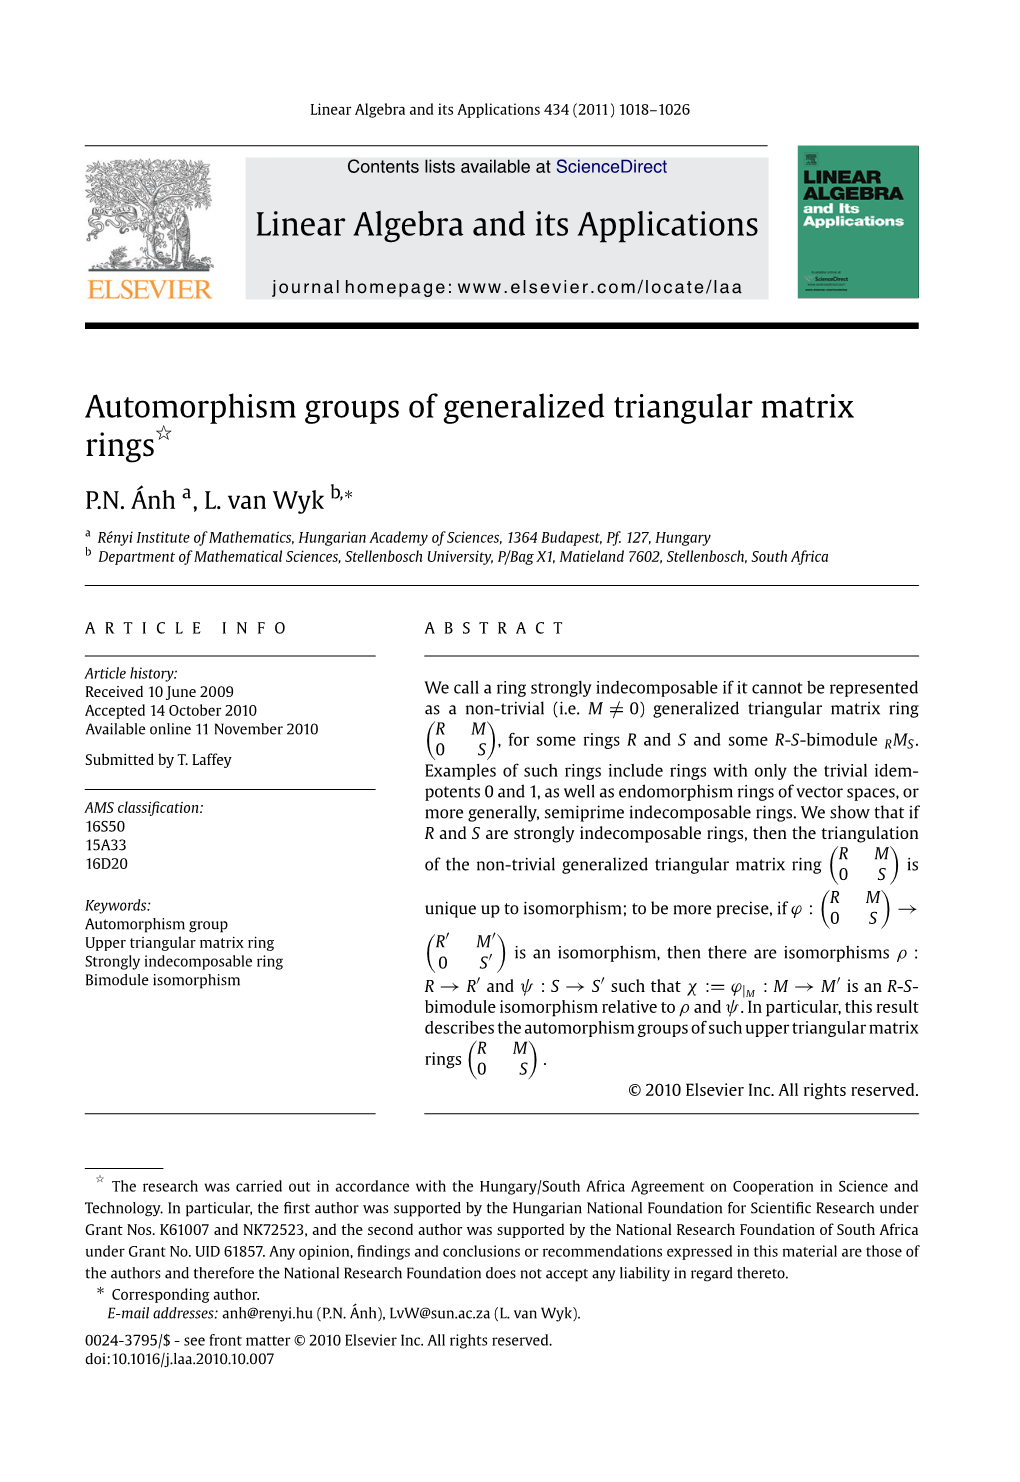 Automorphism Groups of Generalized Triangular Matrix Rings